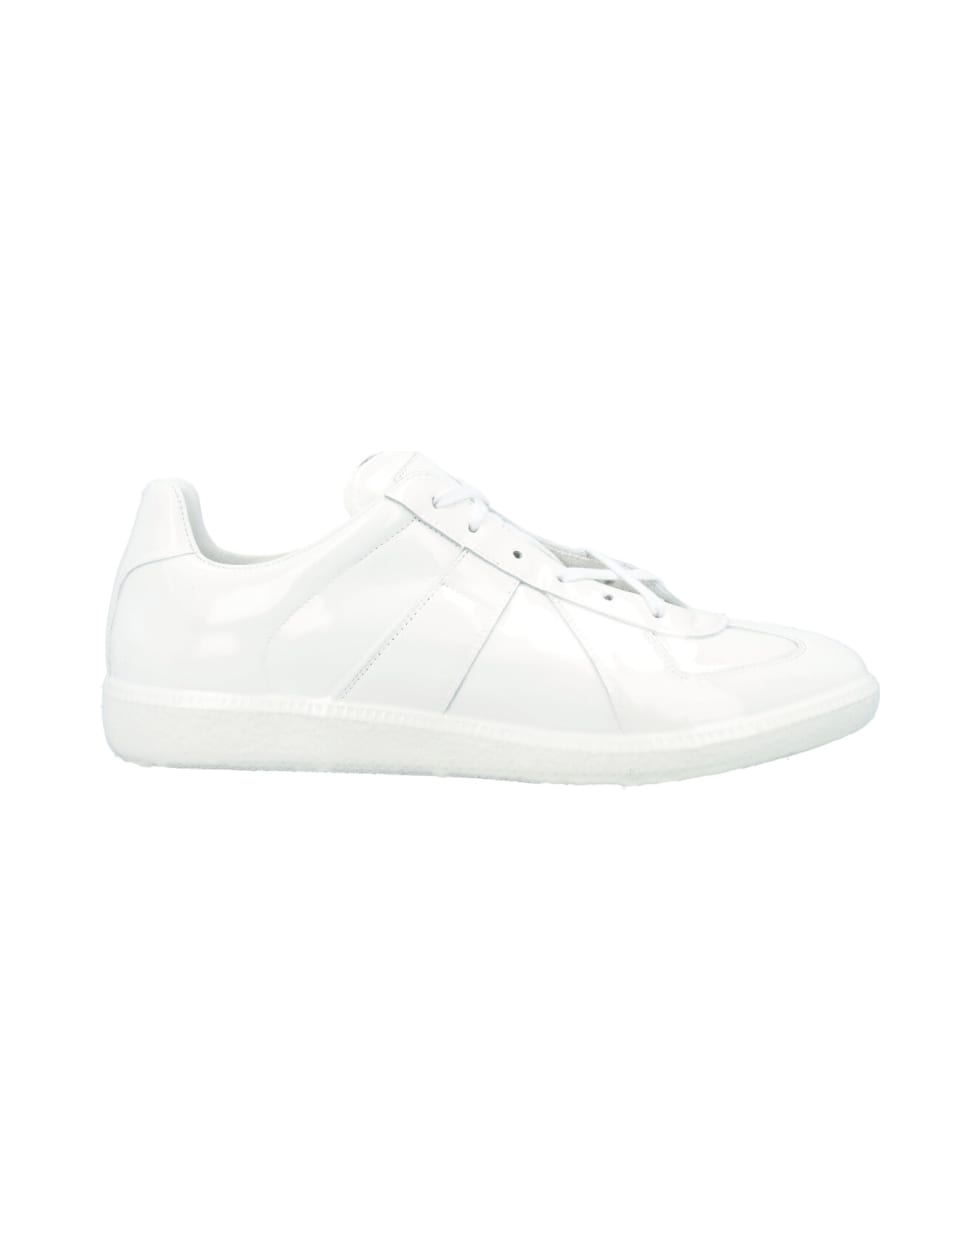 Maison Margiela Replica Low-top Sneakers - WHITE